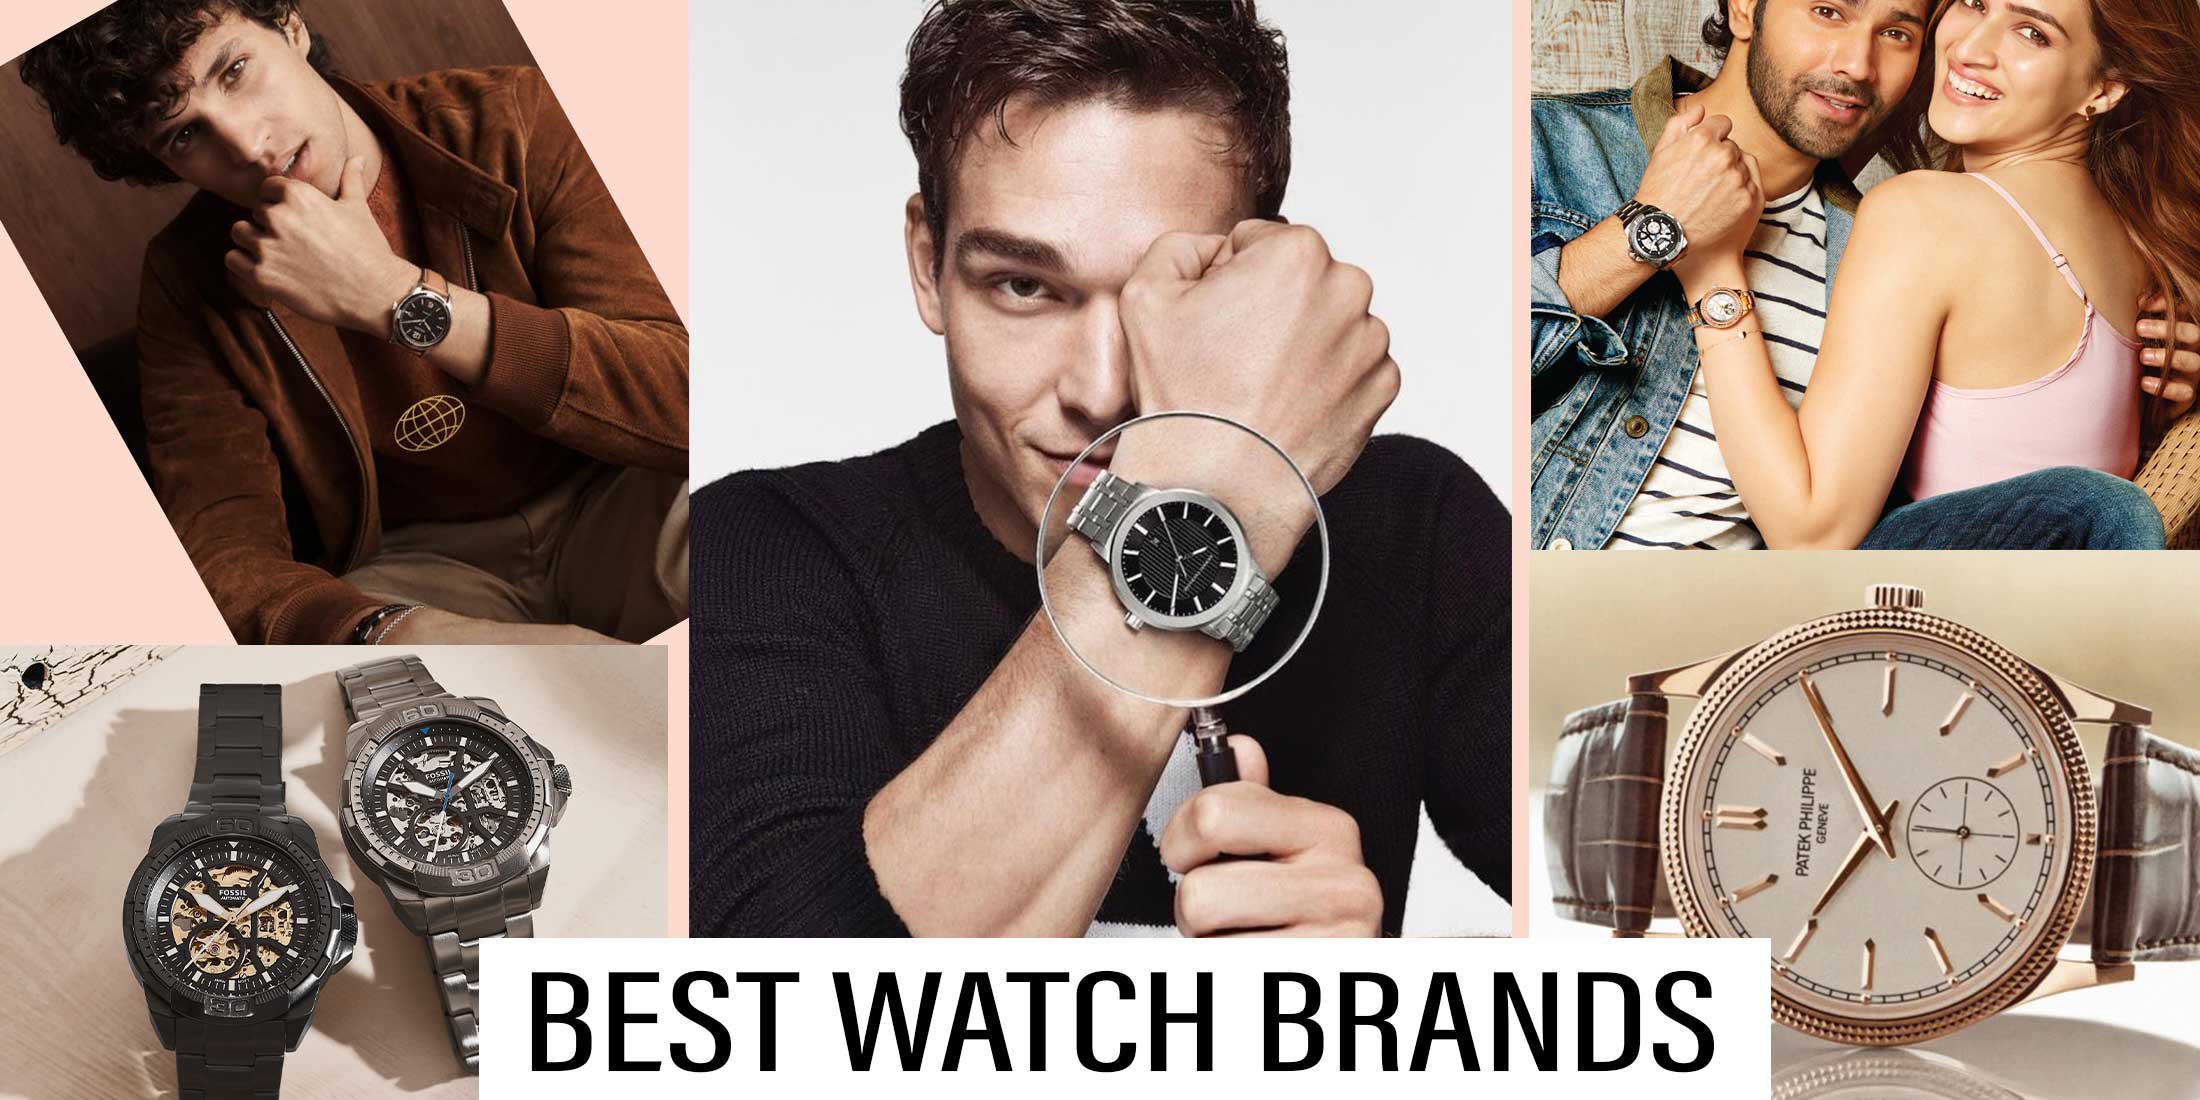 10 Best Watch Brands in India 2023